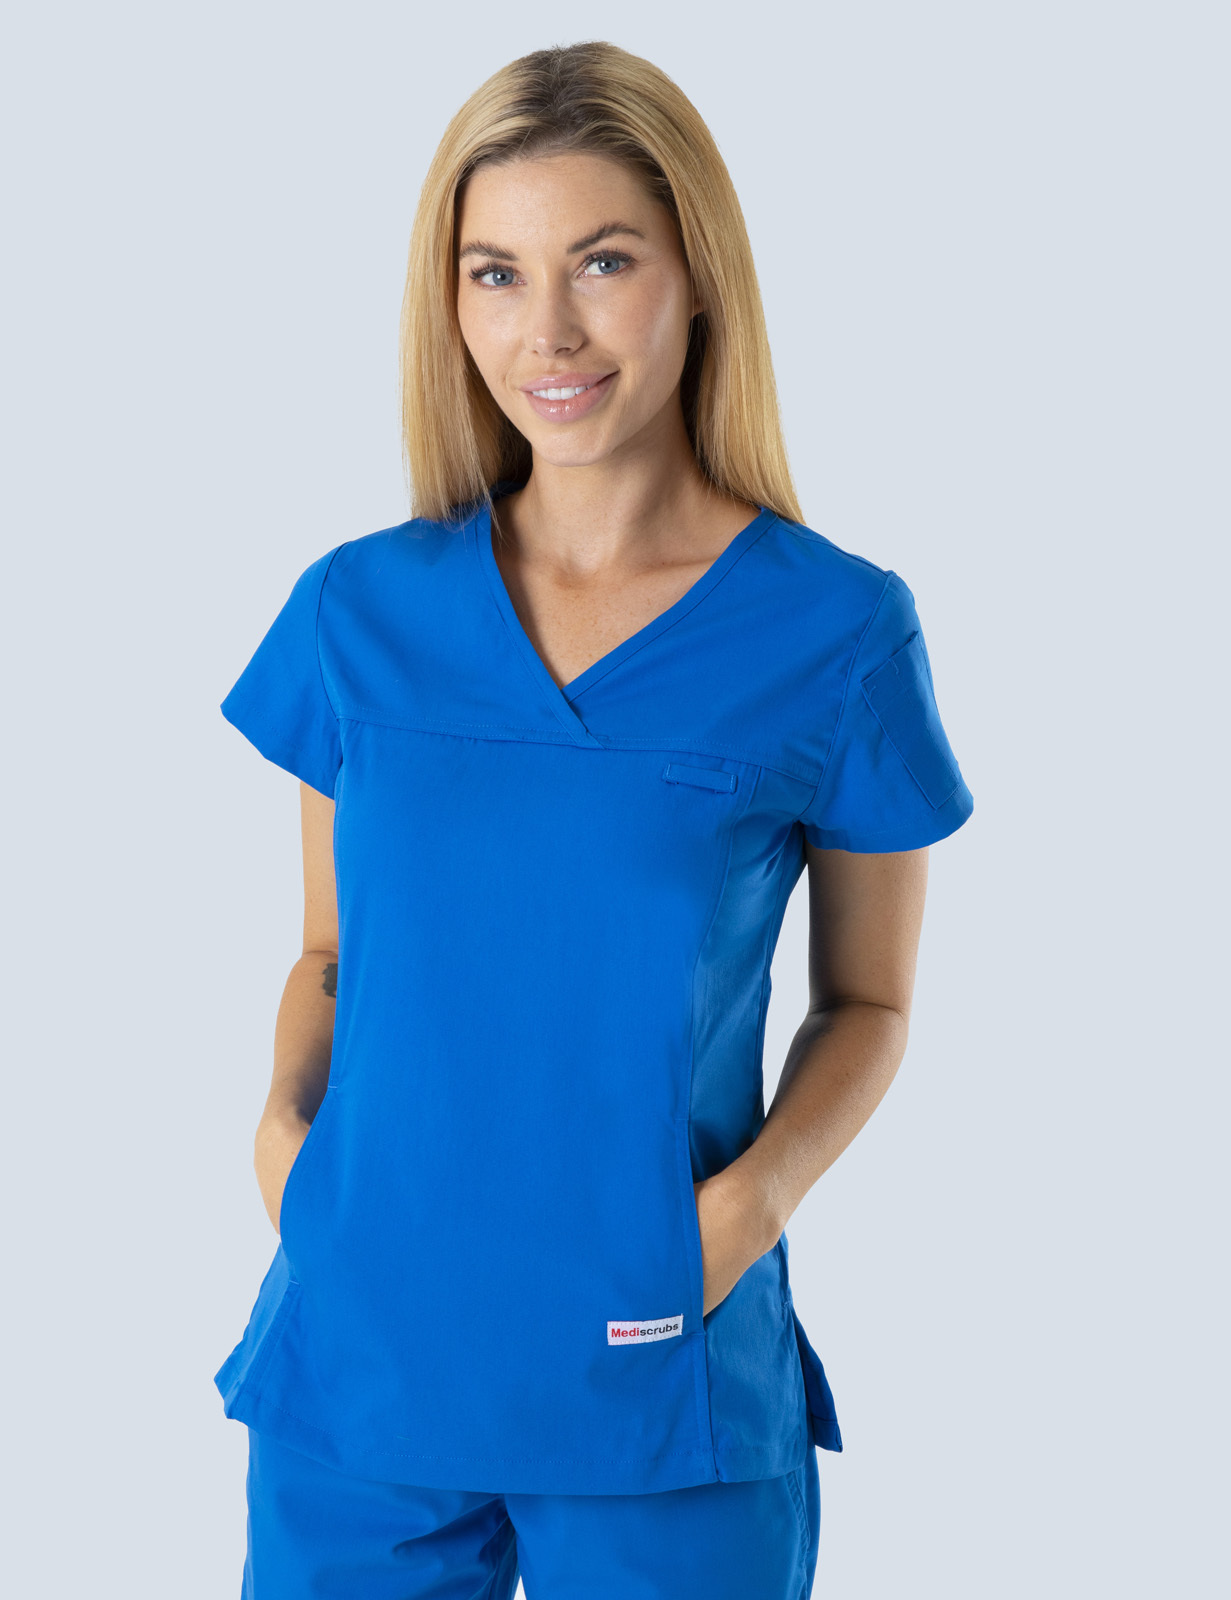 Queensland Children's Hospital Emergency Department Senior Medical Officer Uniform Top Bundle  (Women's Fit Top in Royal  incl Logos)